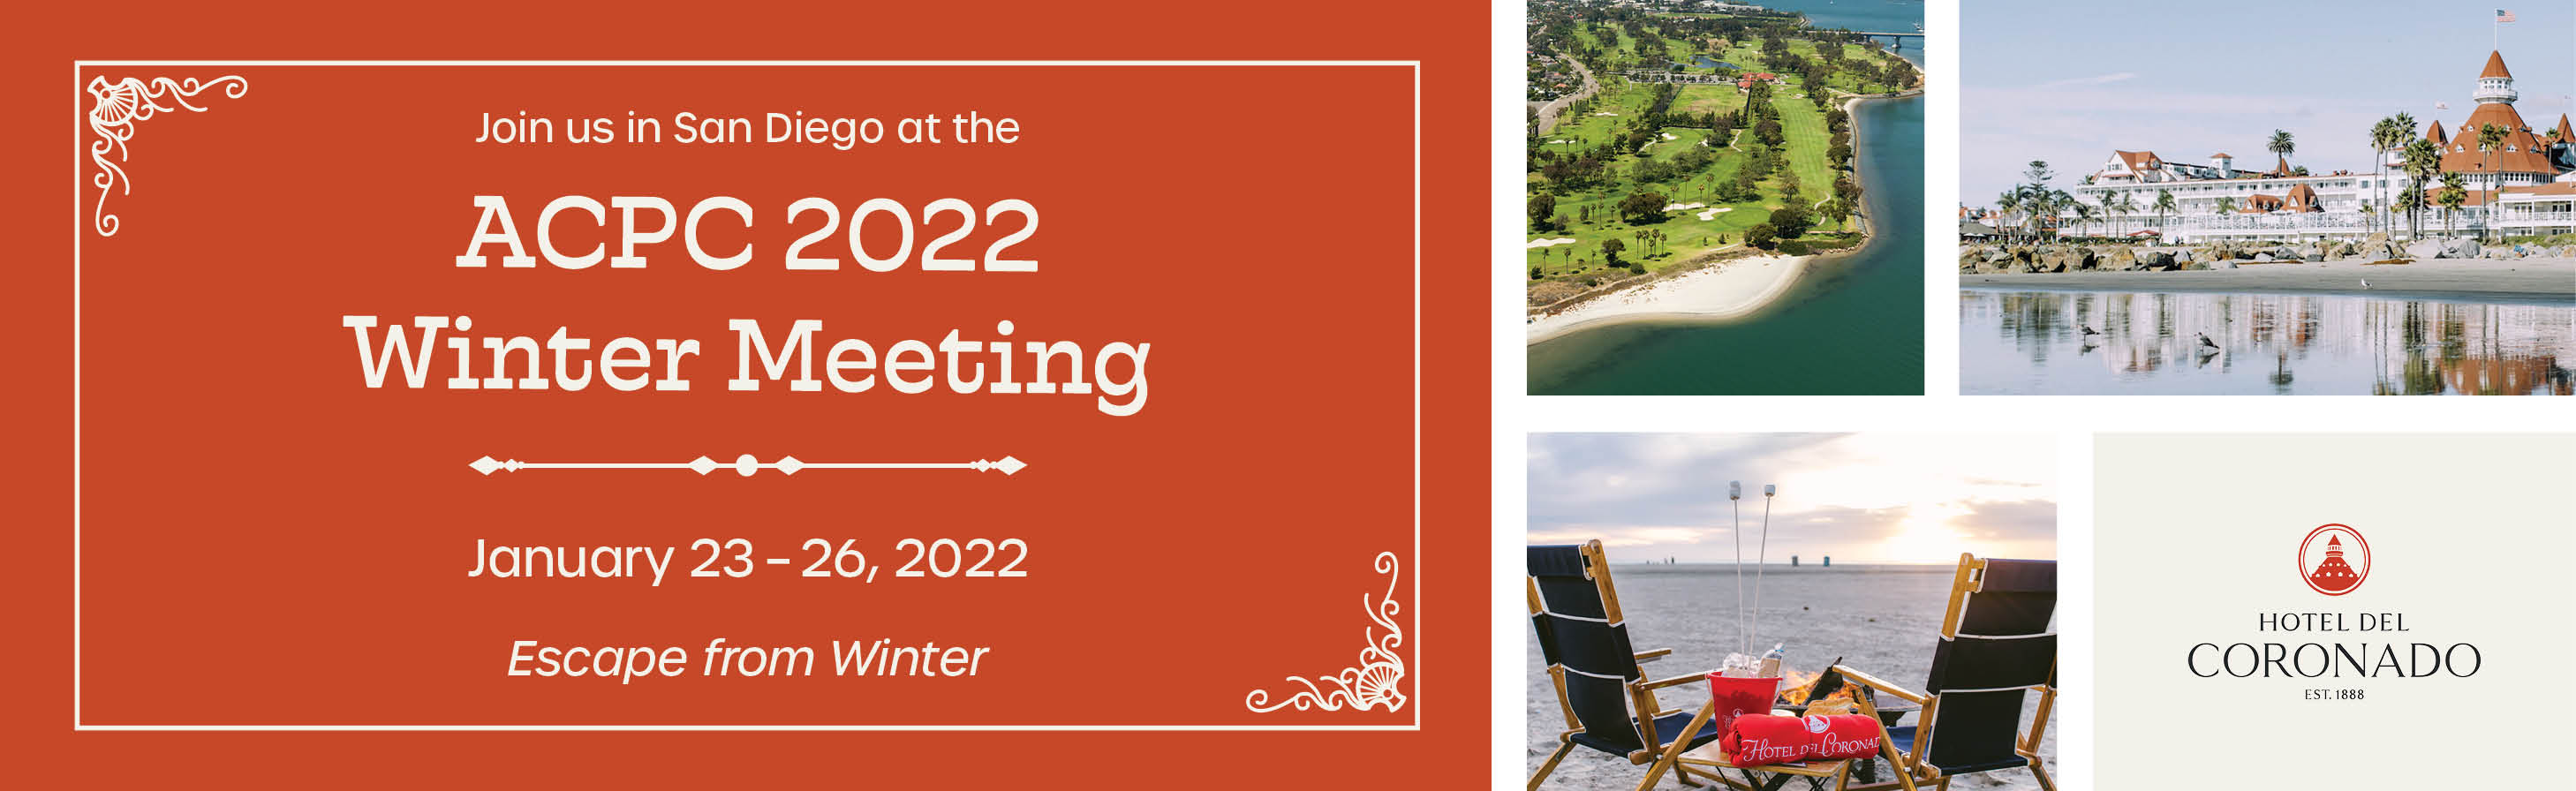 20525 ACPC 2022 Winter Meeting Website Header R2 2